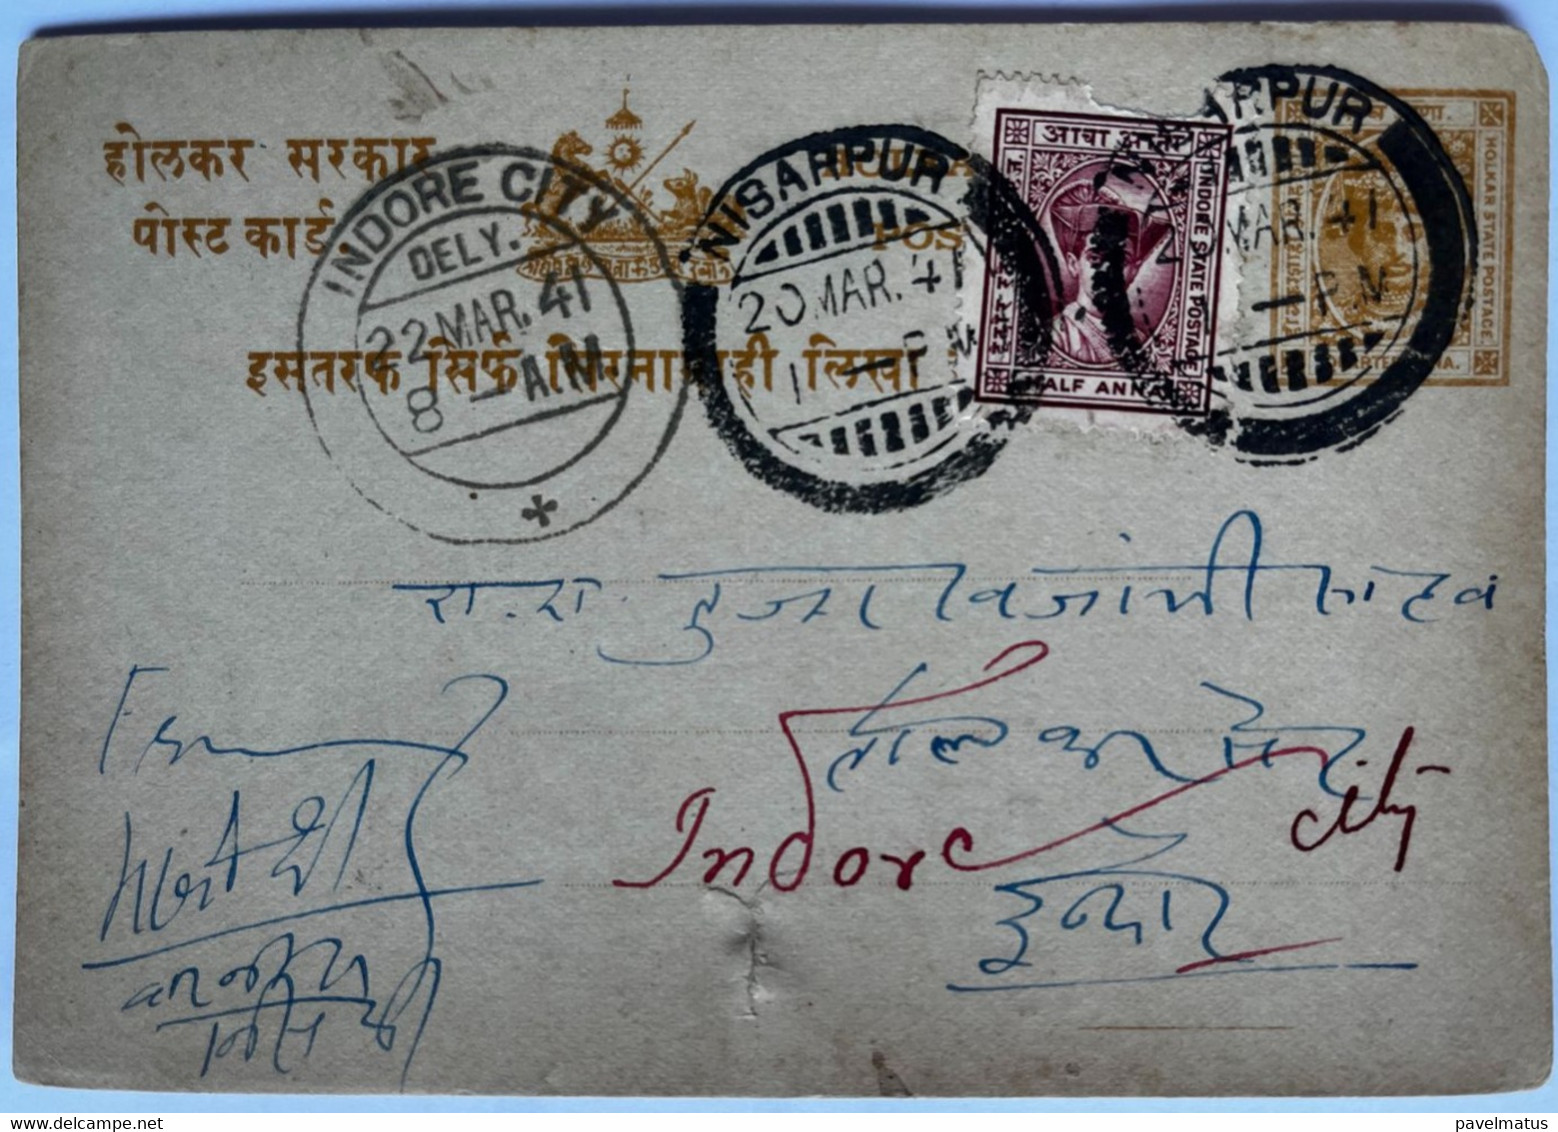 Holkar/Indore 1941  Uprated Postal Card  Nisarpur 20.3.1941 To Indore City - Holkar